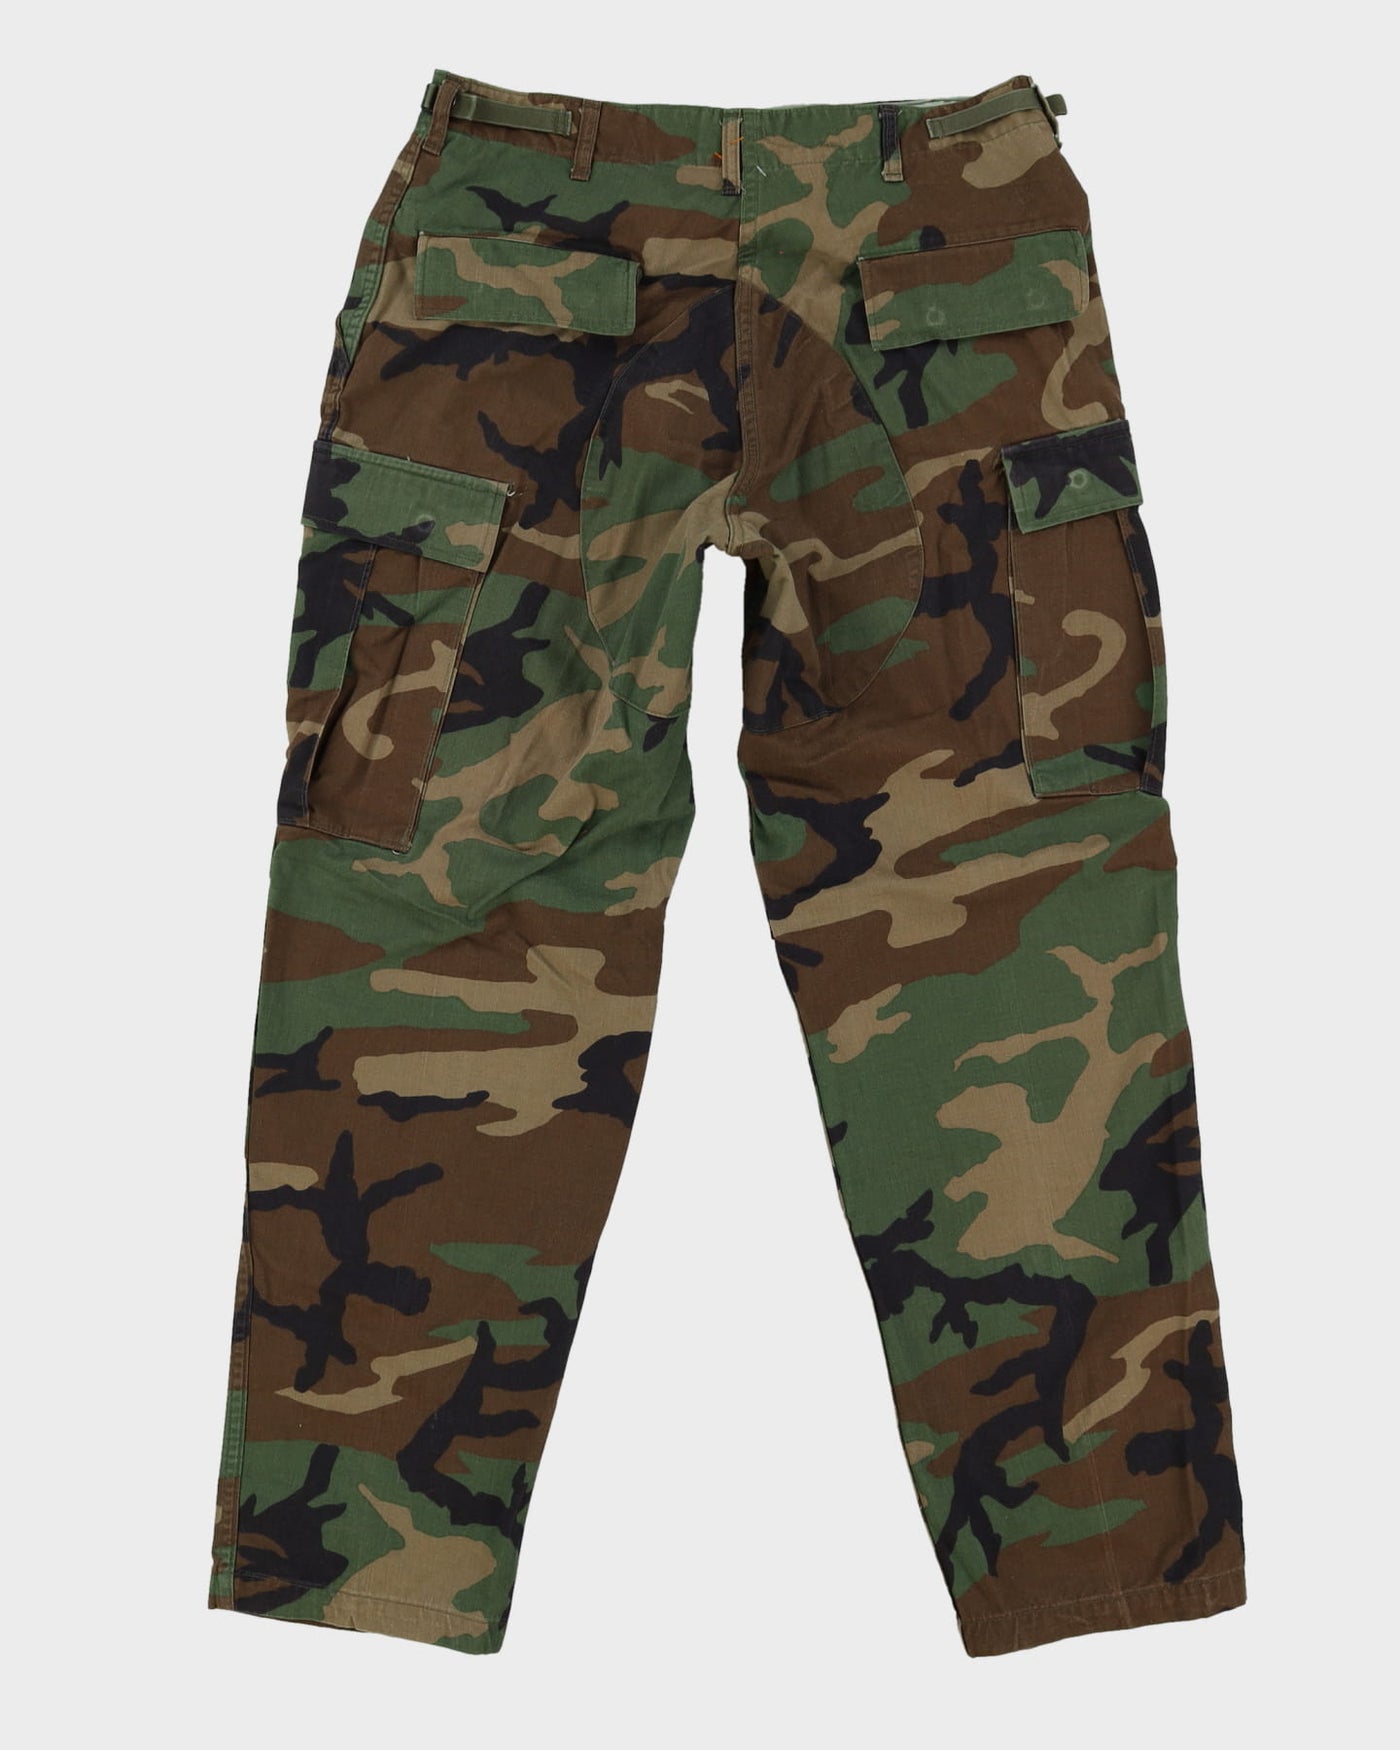 Vintage 80s US Military Woodland Camo Combat Trousers - W34 L32